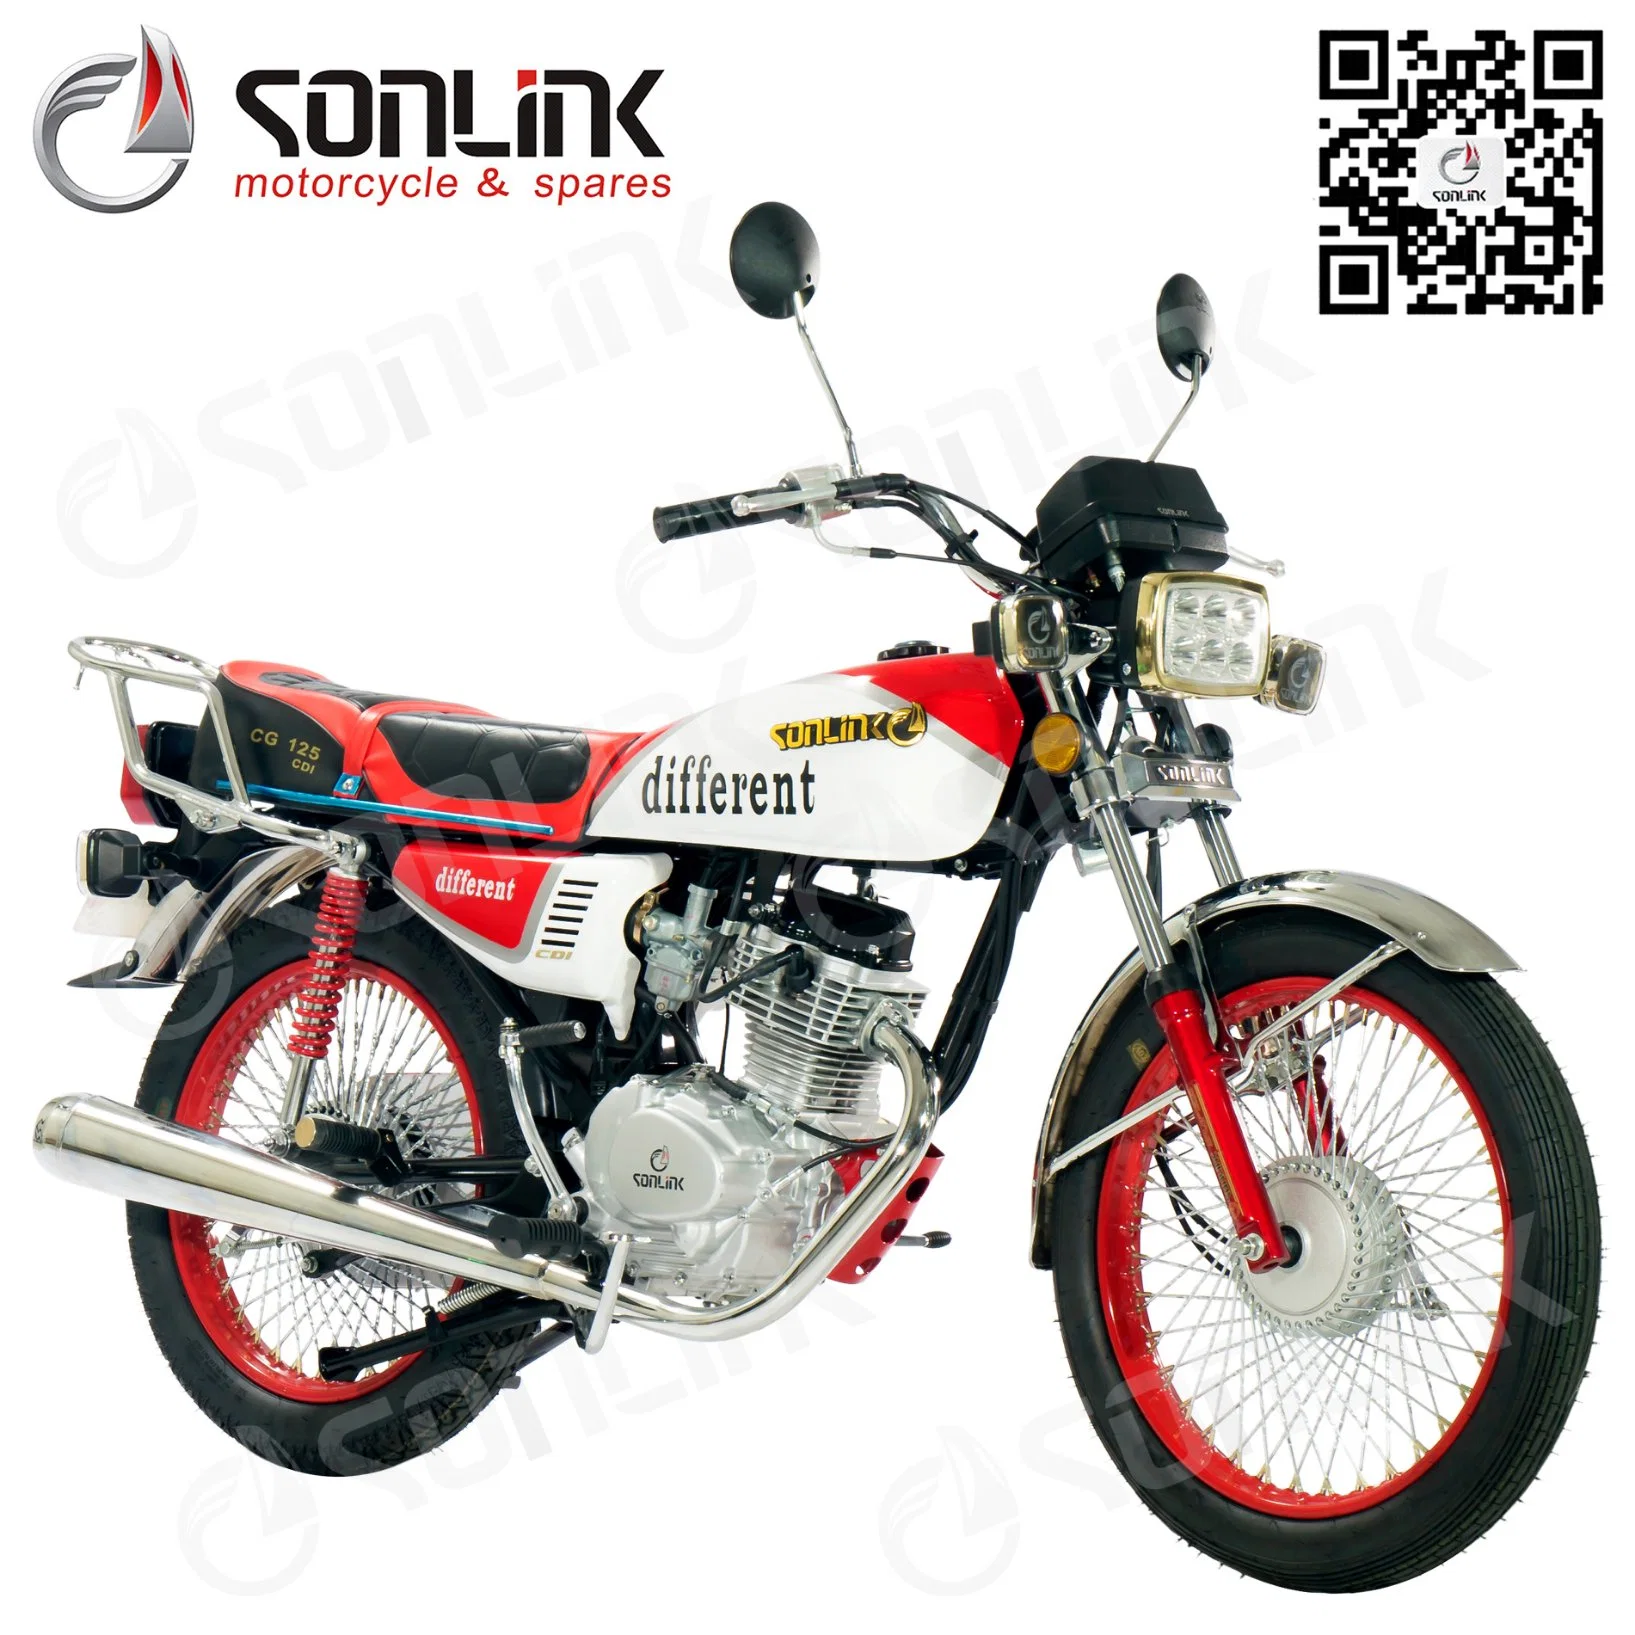 125cc 150cc 200cc Afghan Coloration Cg Model Manned 125cc Motorcycle/150cc Motorbike/ 200cc Motor Cycle (SL150-C)